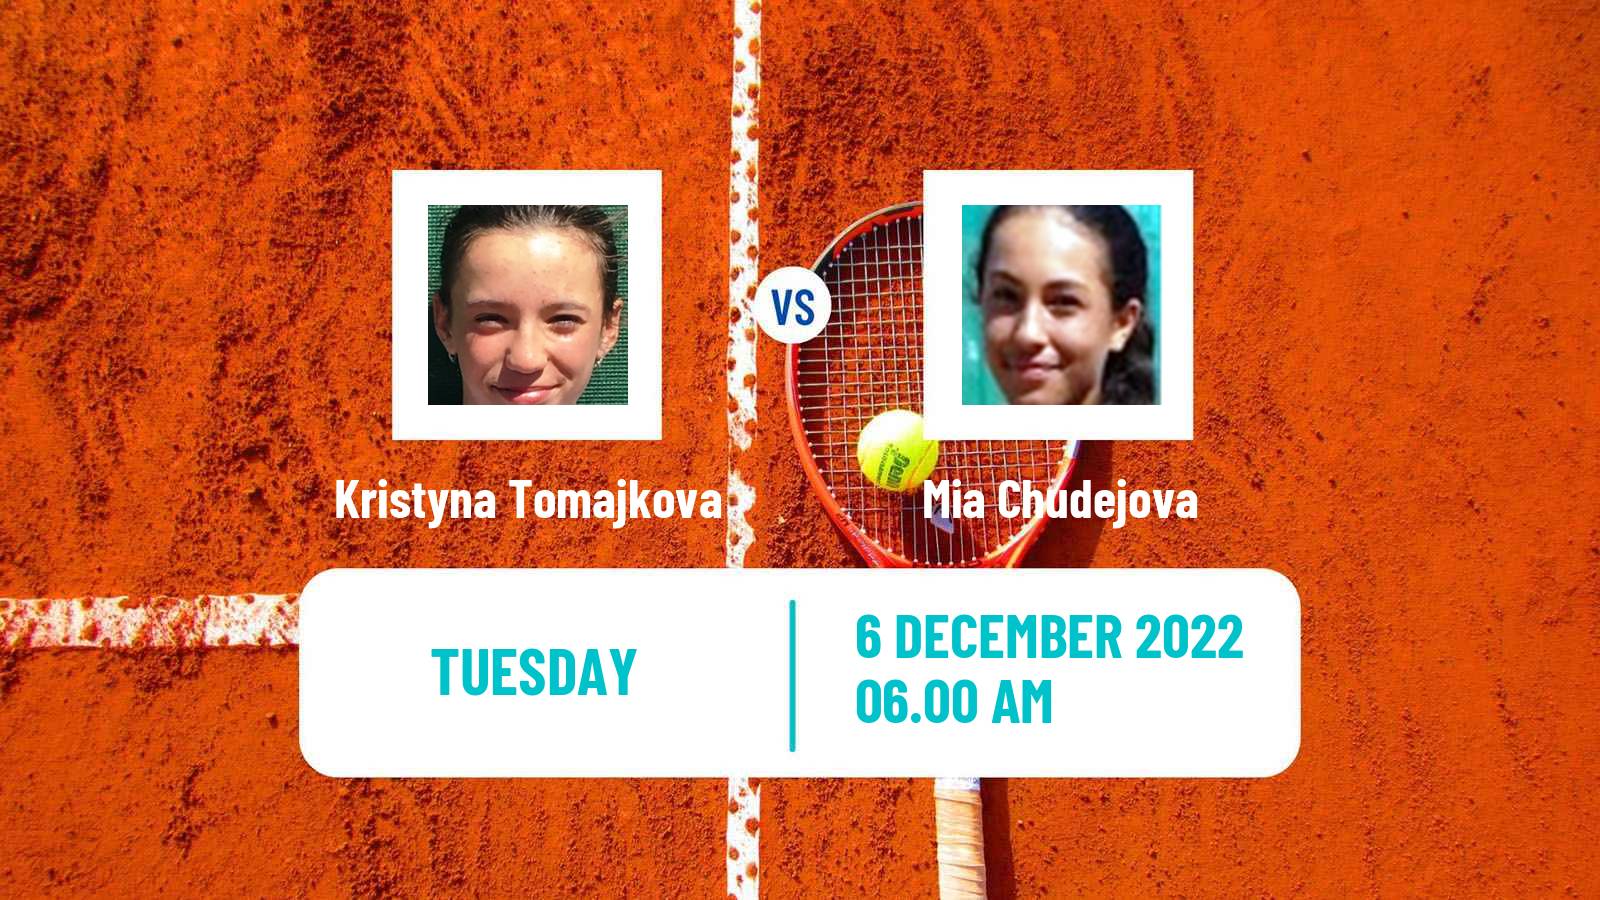 Tennis ITF Tournaments Kristyna Tomajkova - Mia Chudejova